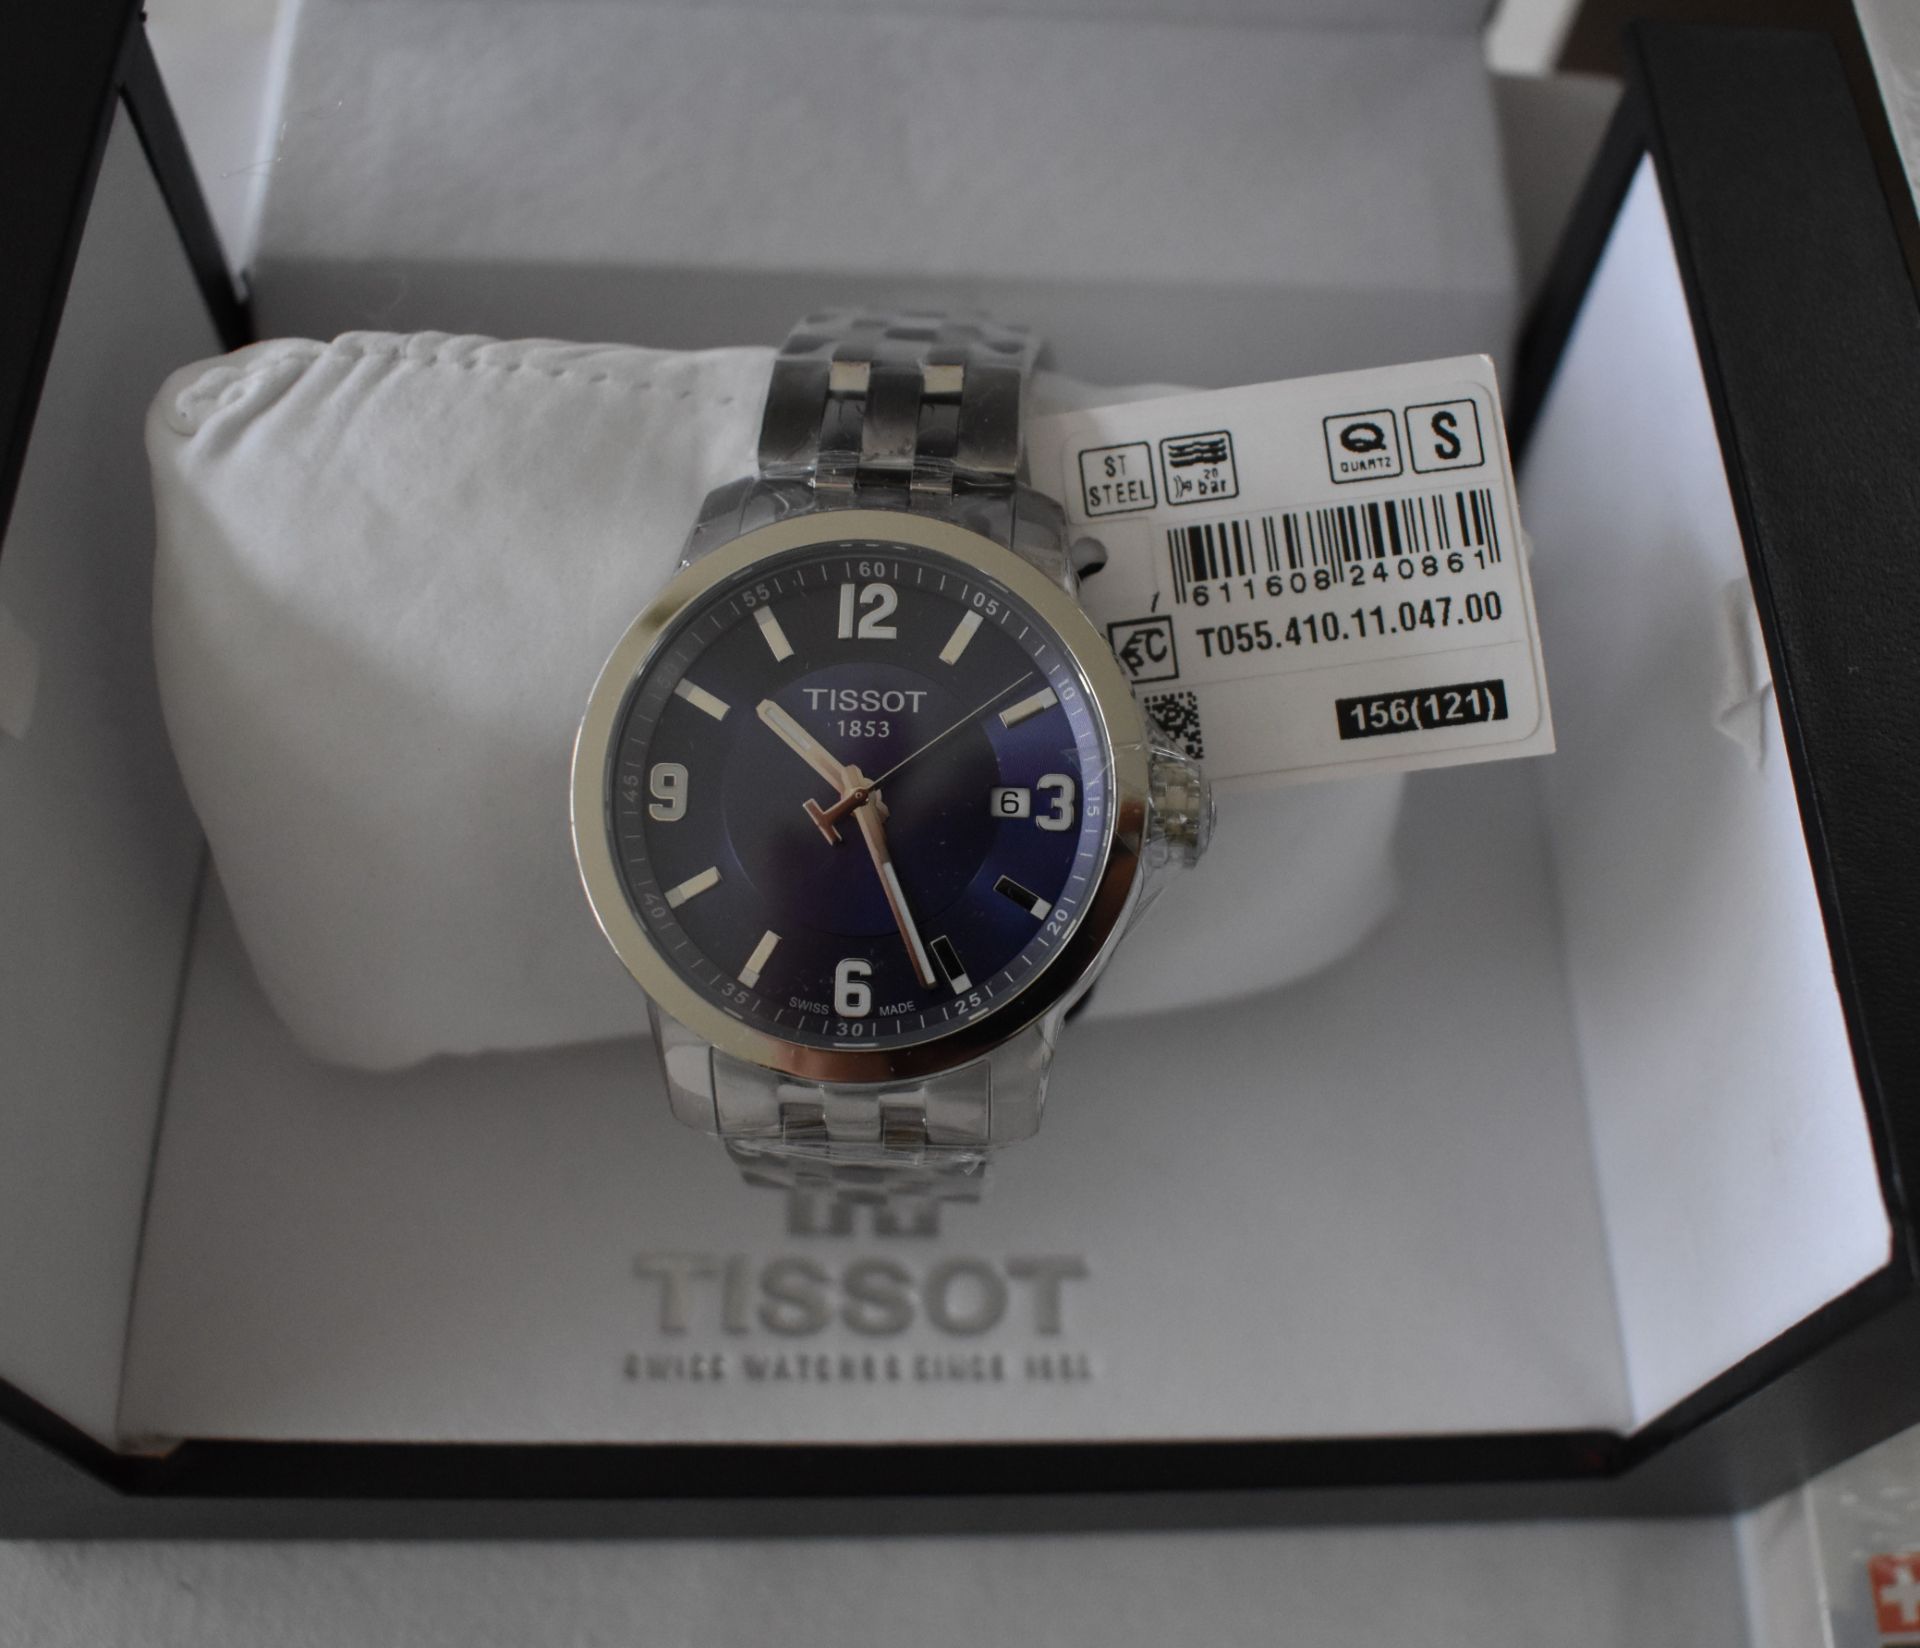 Tissot Men's Watch TO55.410.11.047.00 - Image 2 of 3